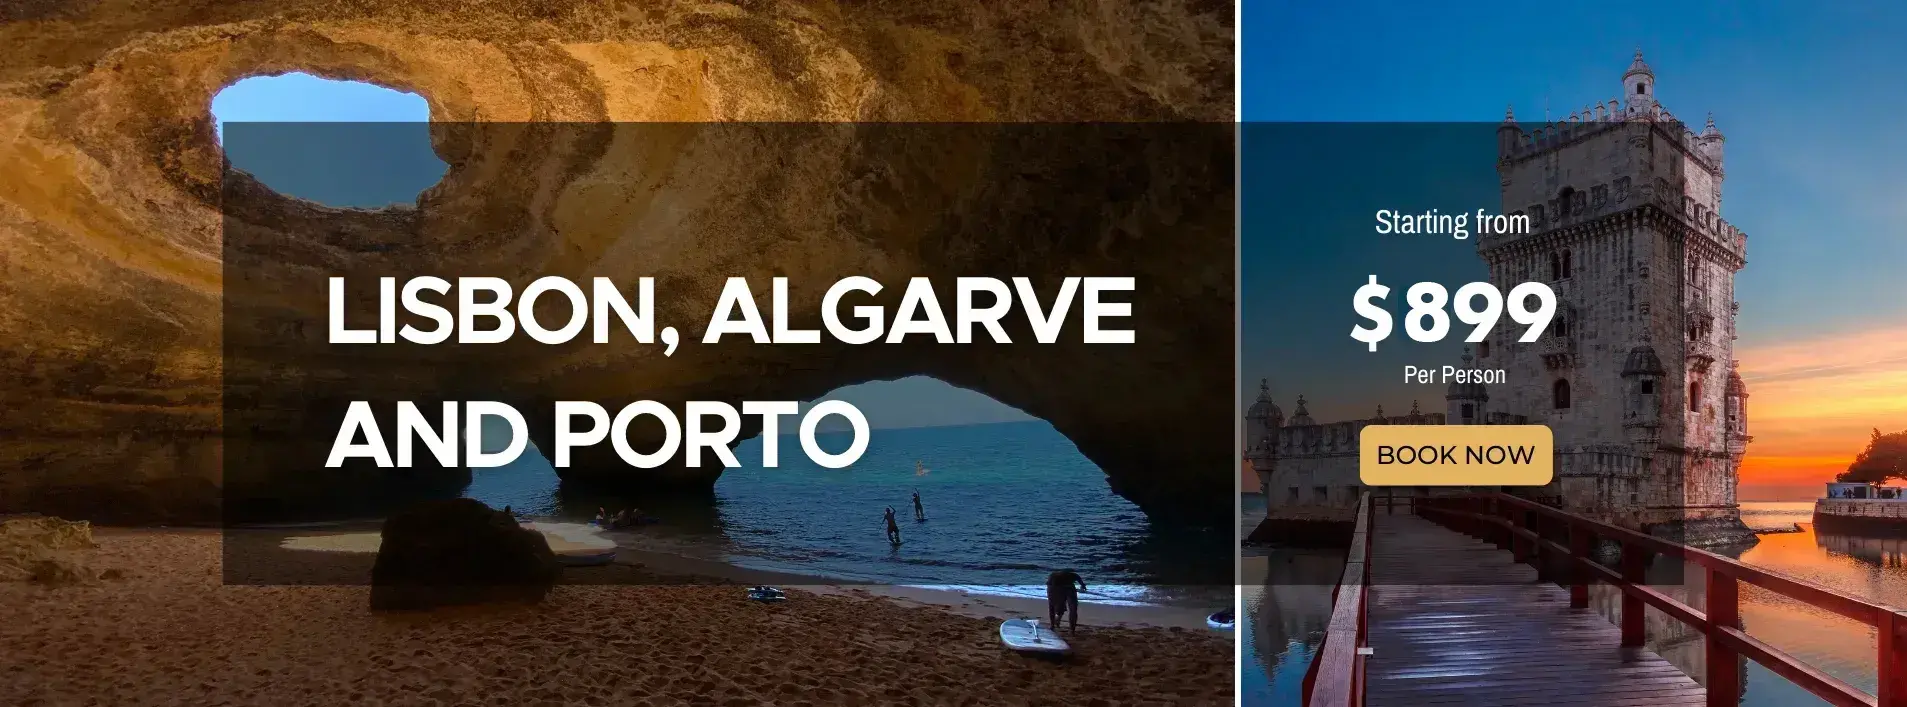 Lisbon, Algarve and Porto W/Tour & Air